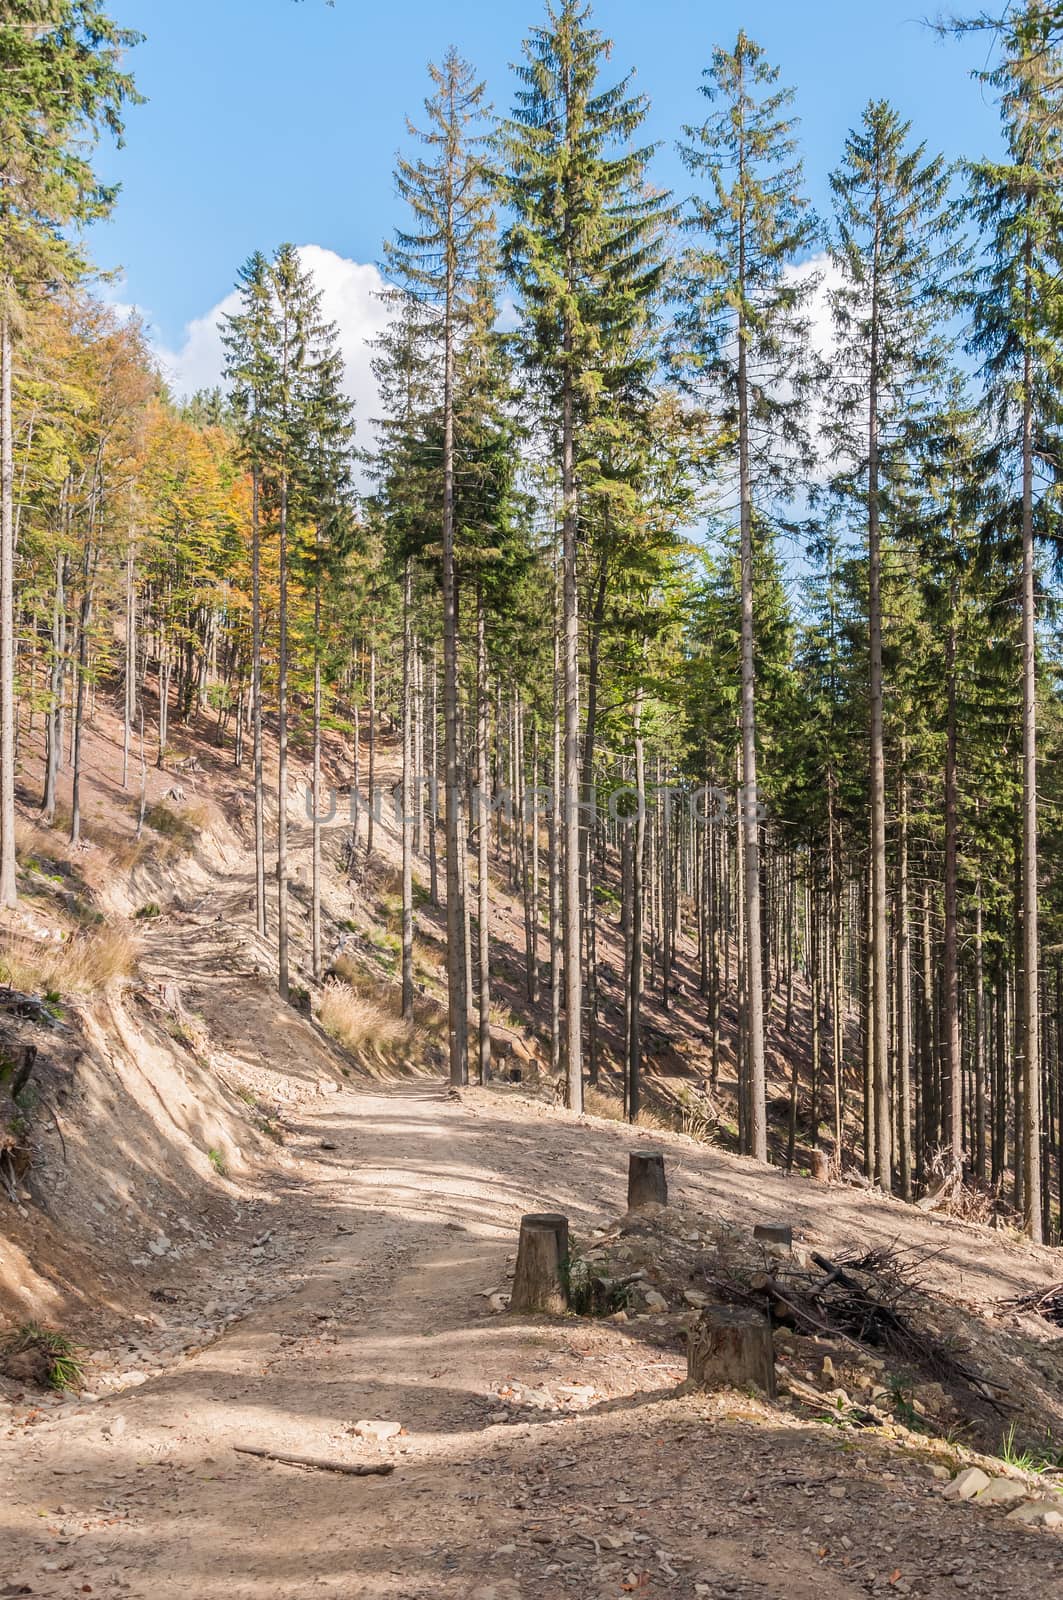 Forest path in Beskid Mountains in Poland, Wielka Racza Mount